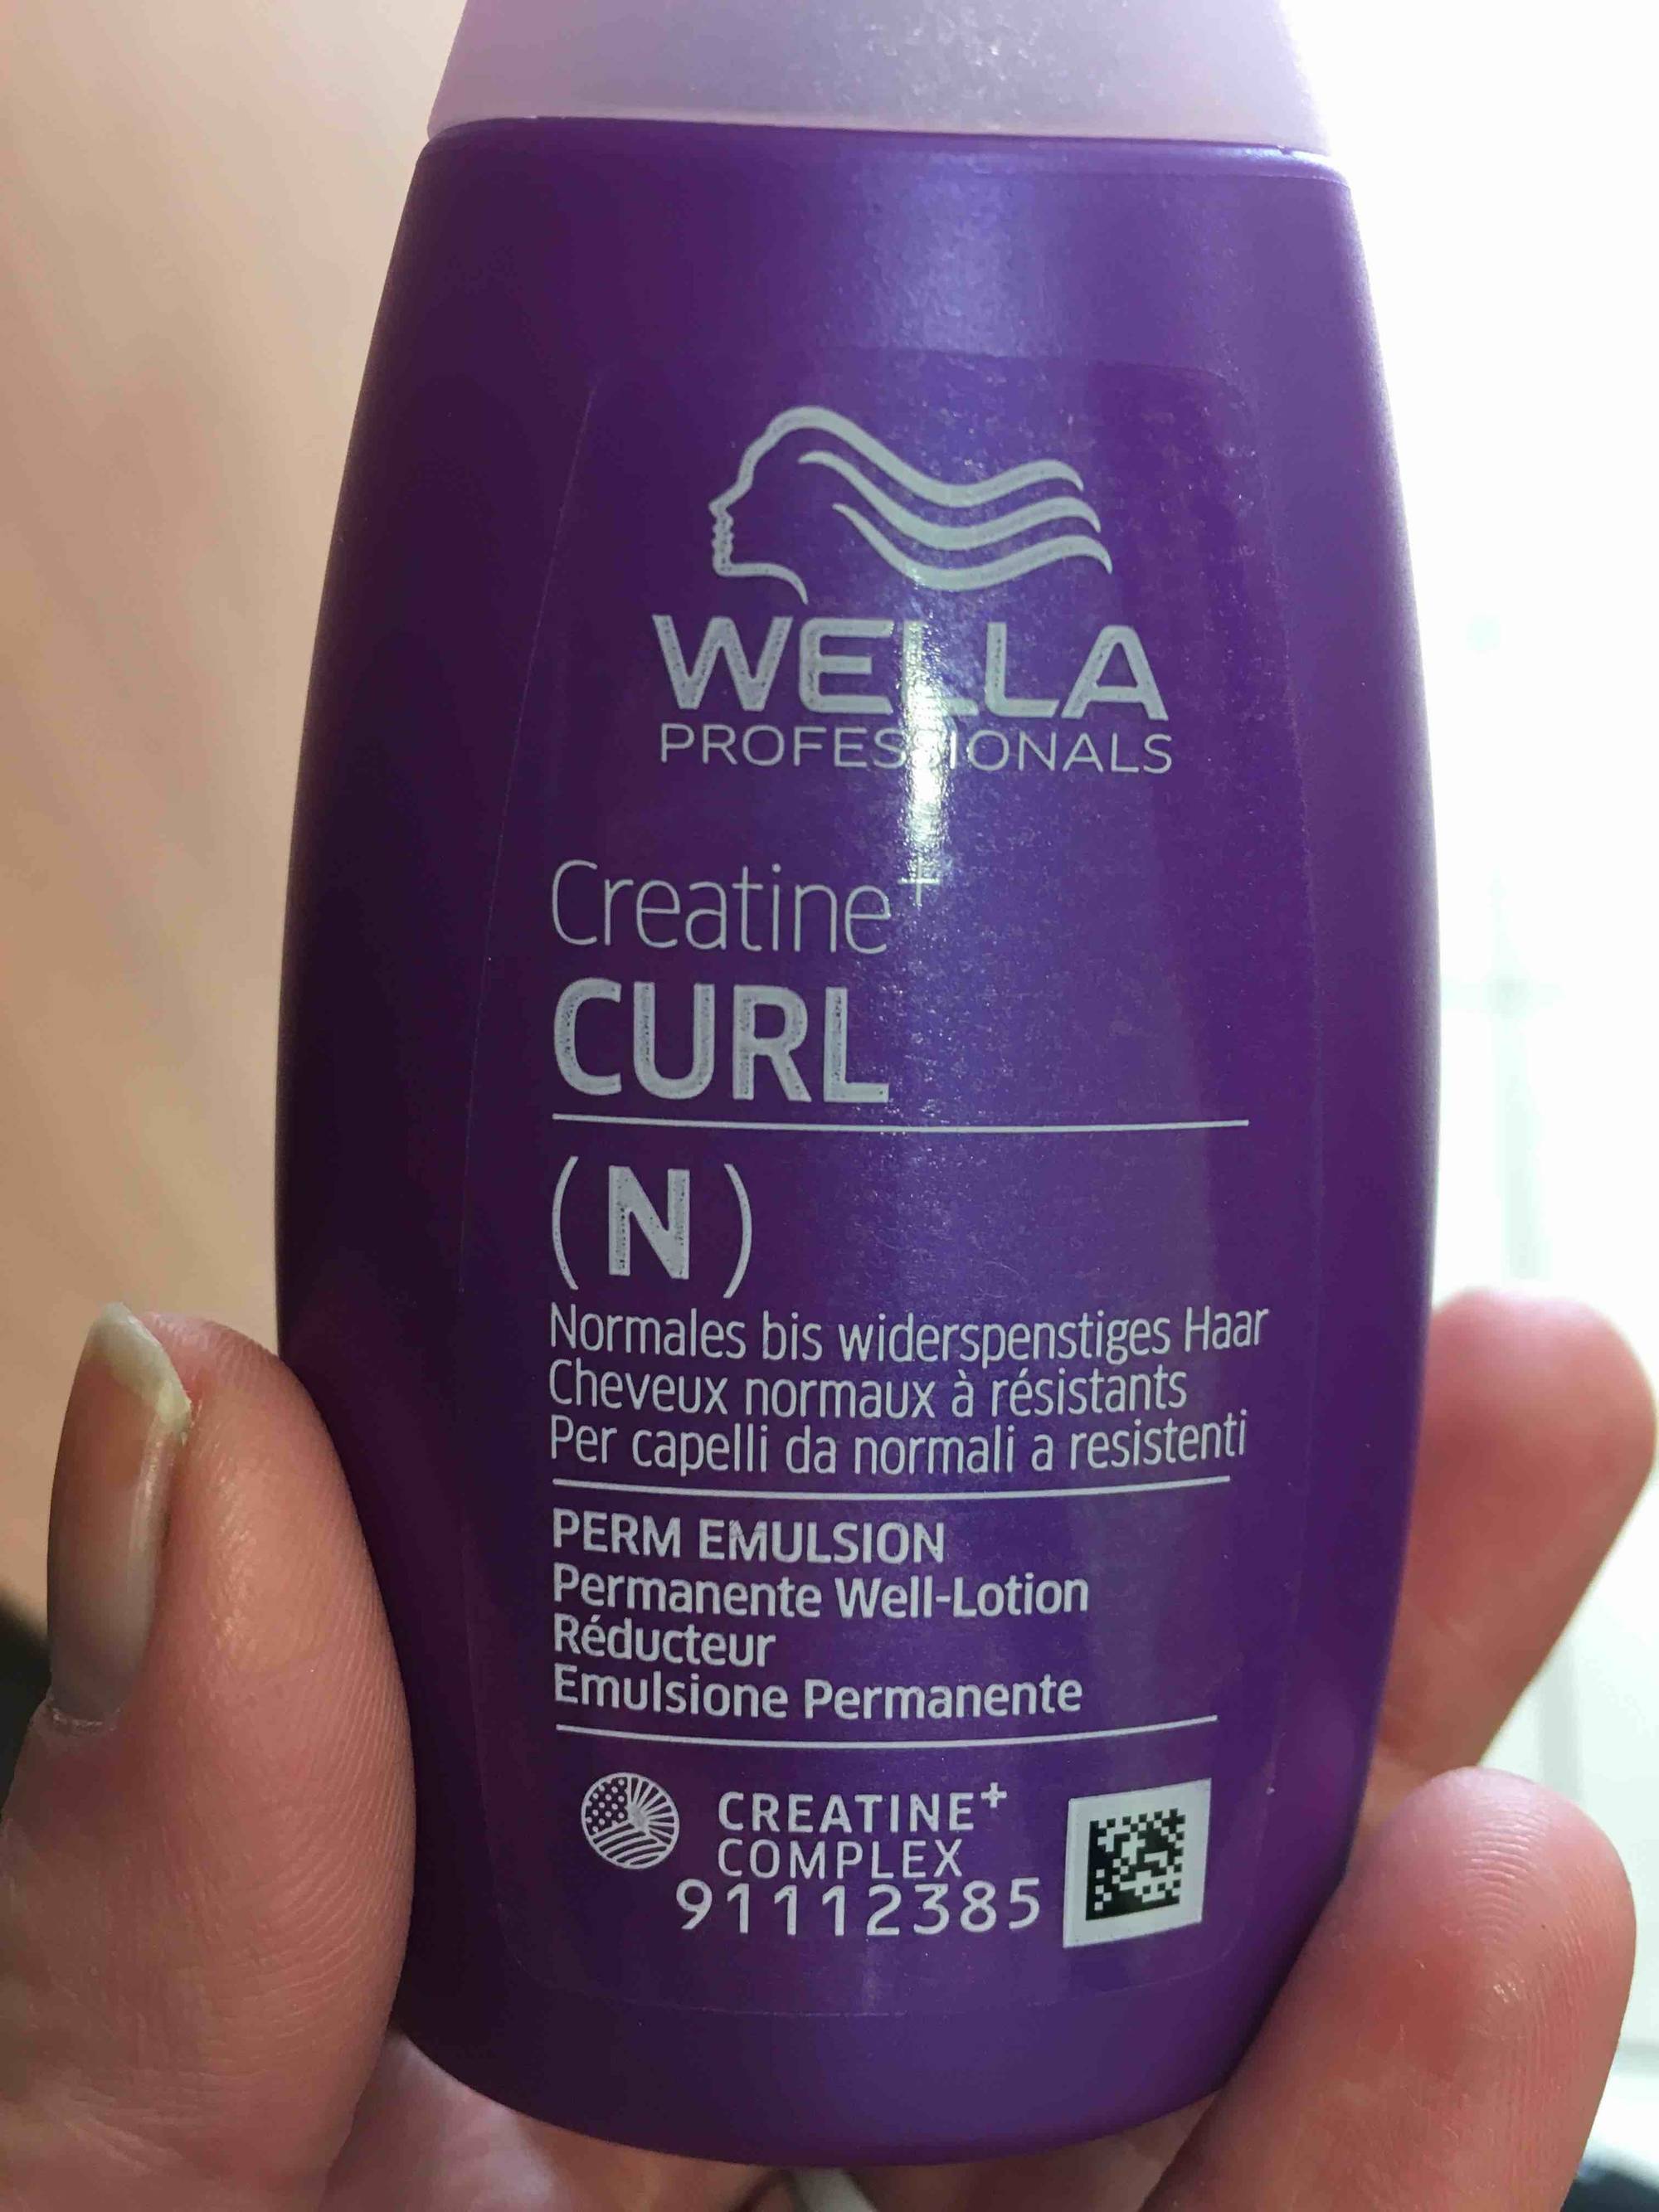 WELLA - Creatine+ Curl - Réducteur emulsione permanente